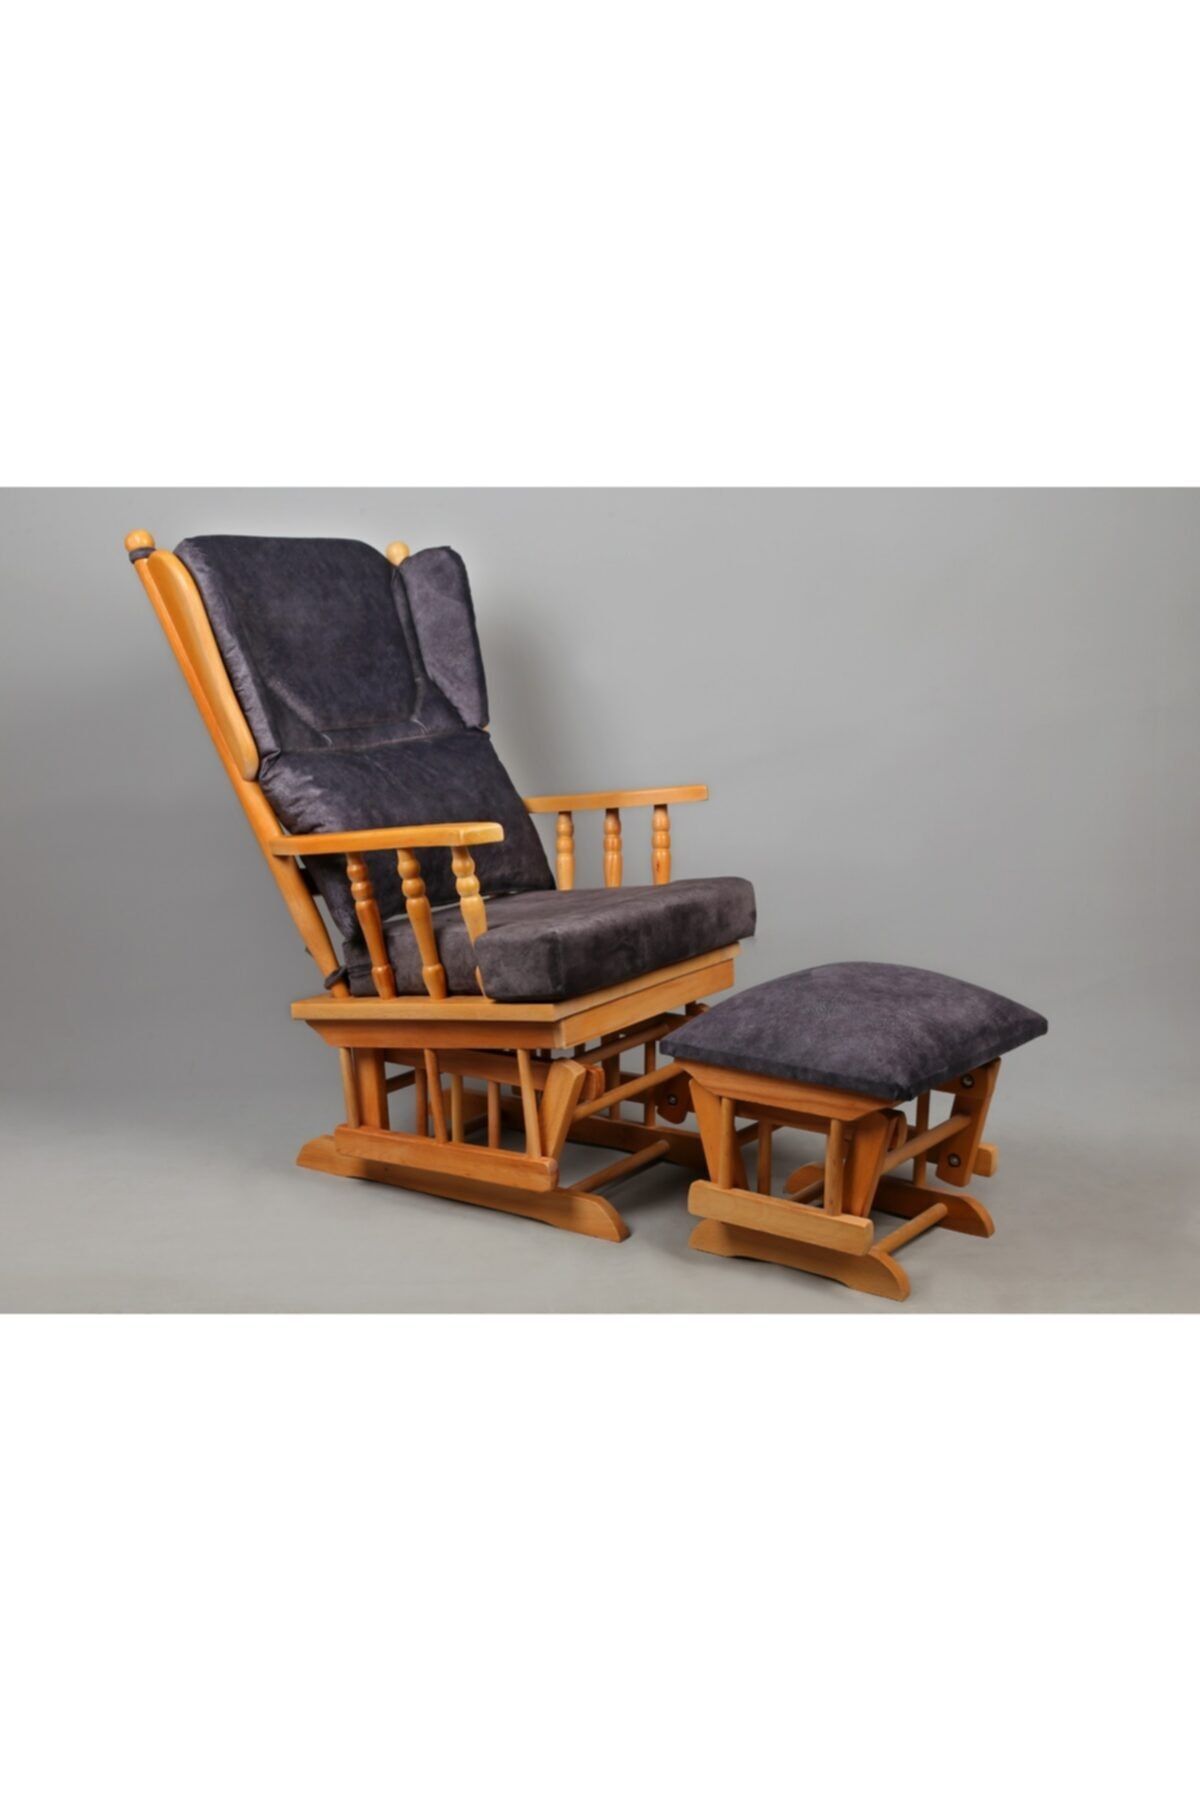 Evgün Concept Sallanan Sandalye Sallanan Koltuk Dinlenme Koltuğu Doğal Ahşap Iskelet Chn11